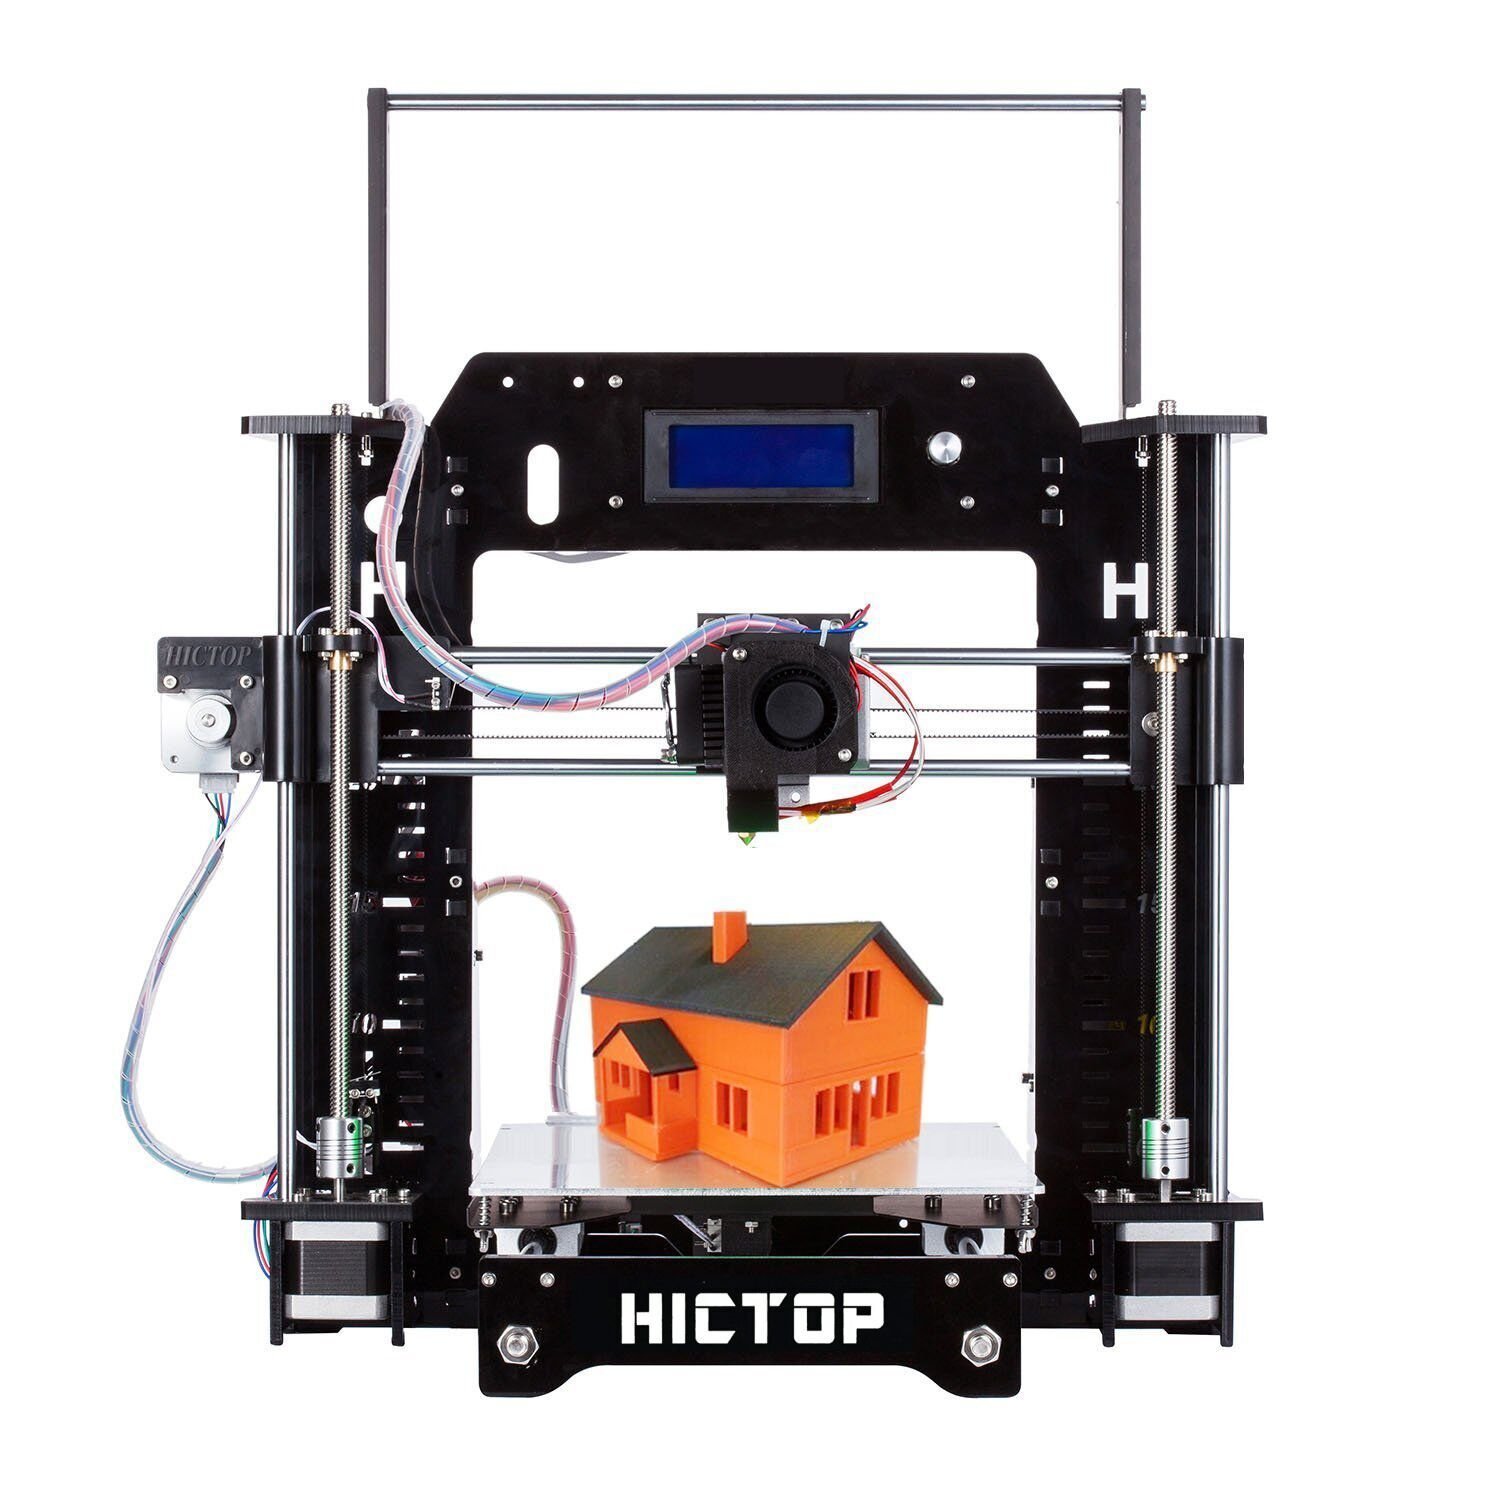 HICTOP 3DP-18 3D Printer Kit Review - 3D Engineer